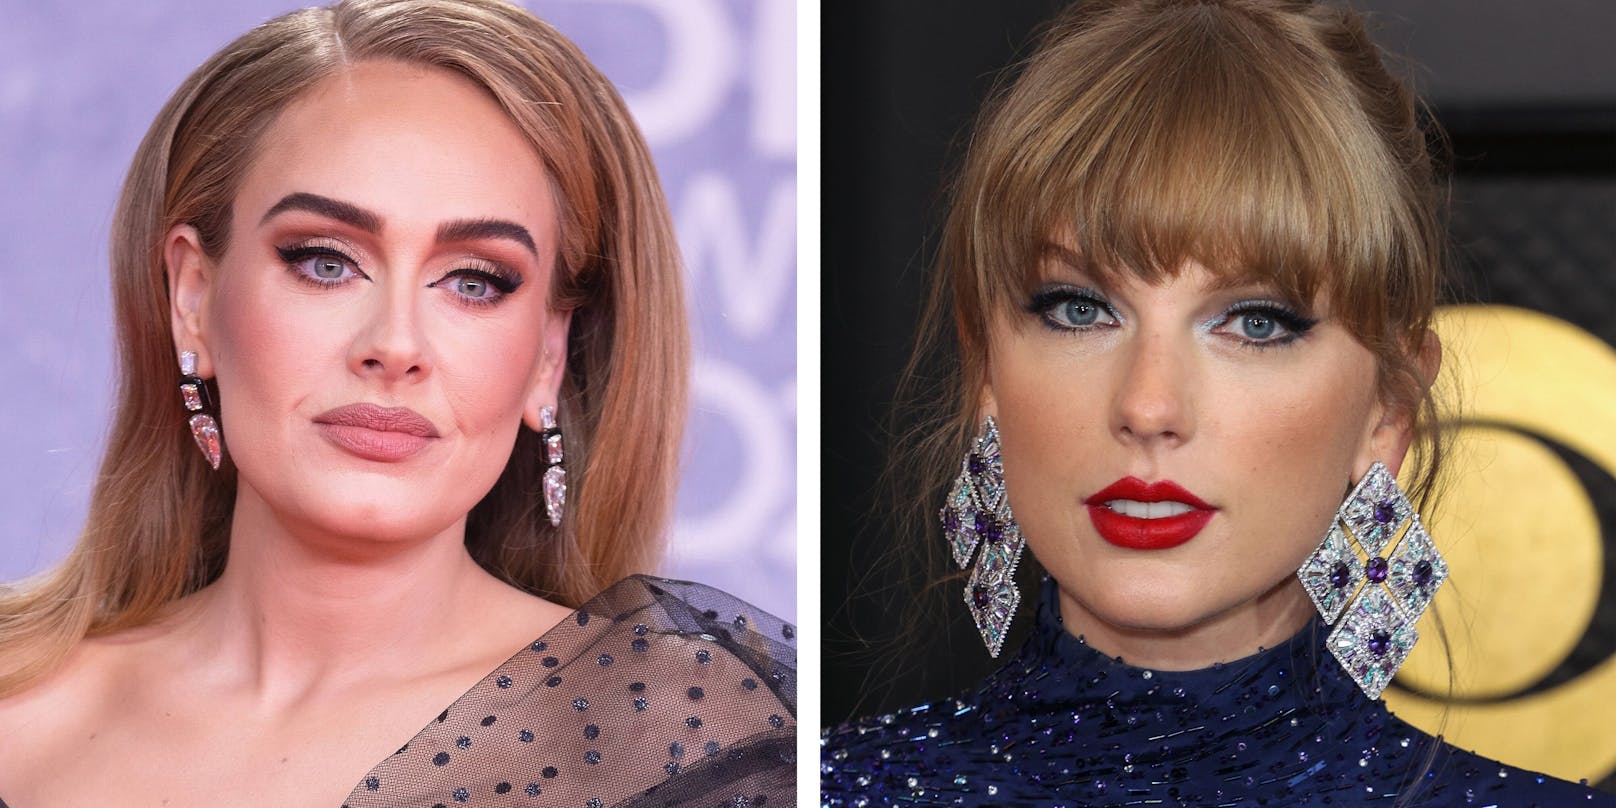 "Eifersüchtig" – so denkt Adele über Taylor Swift